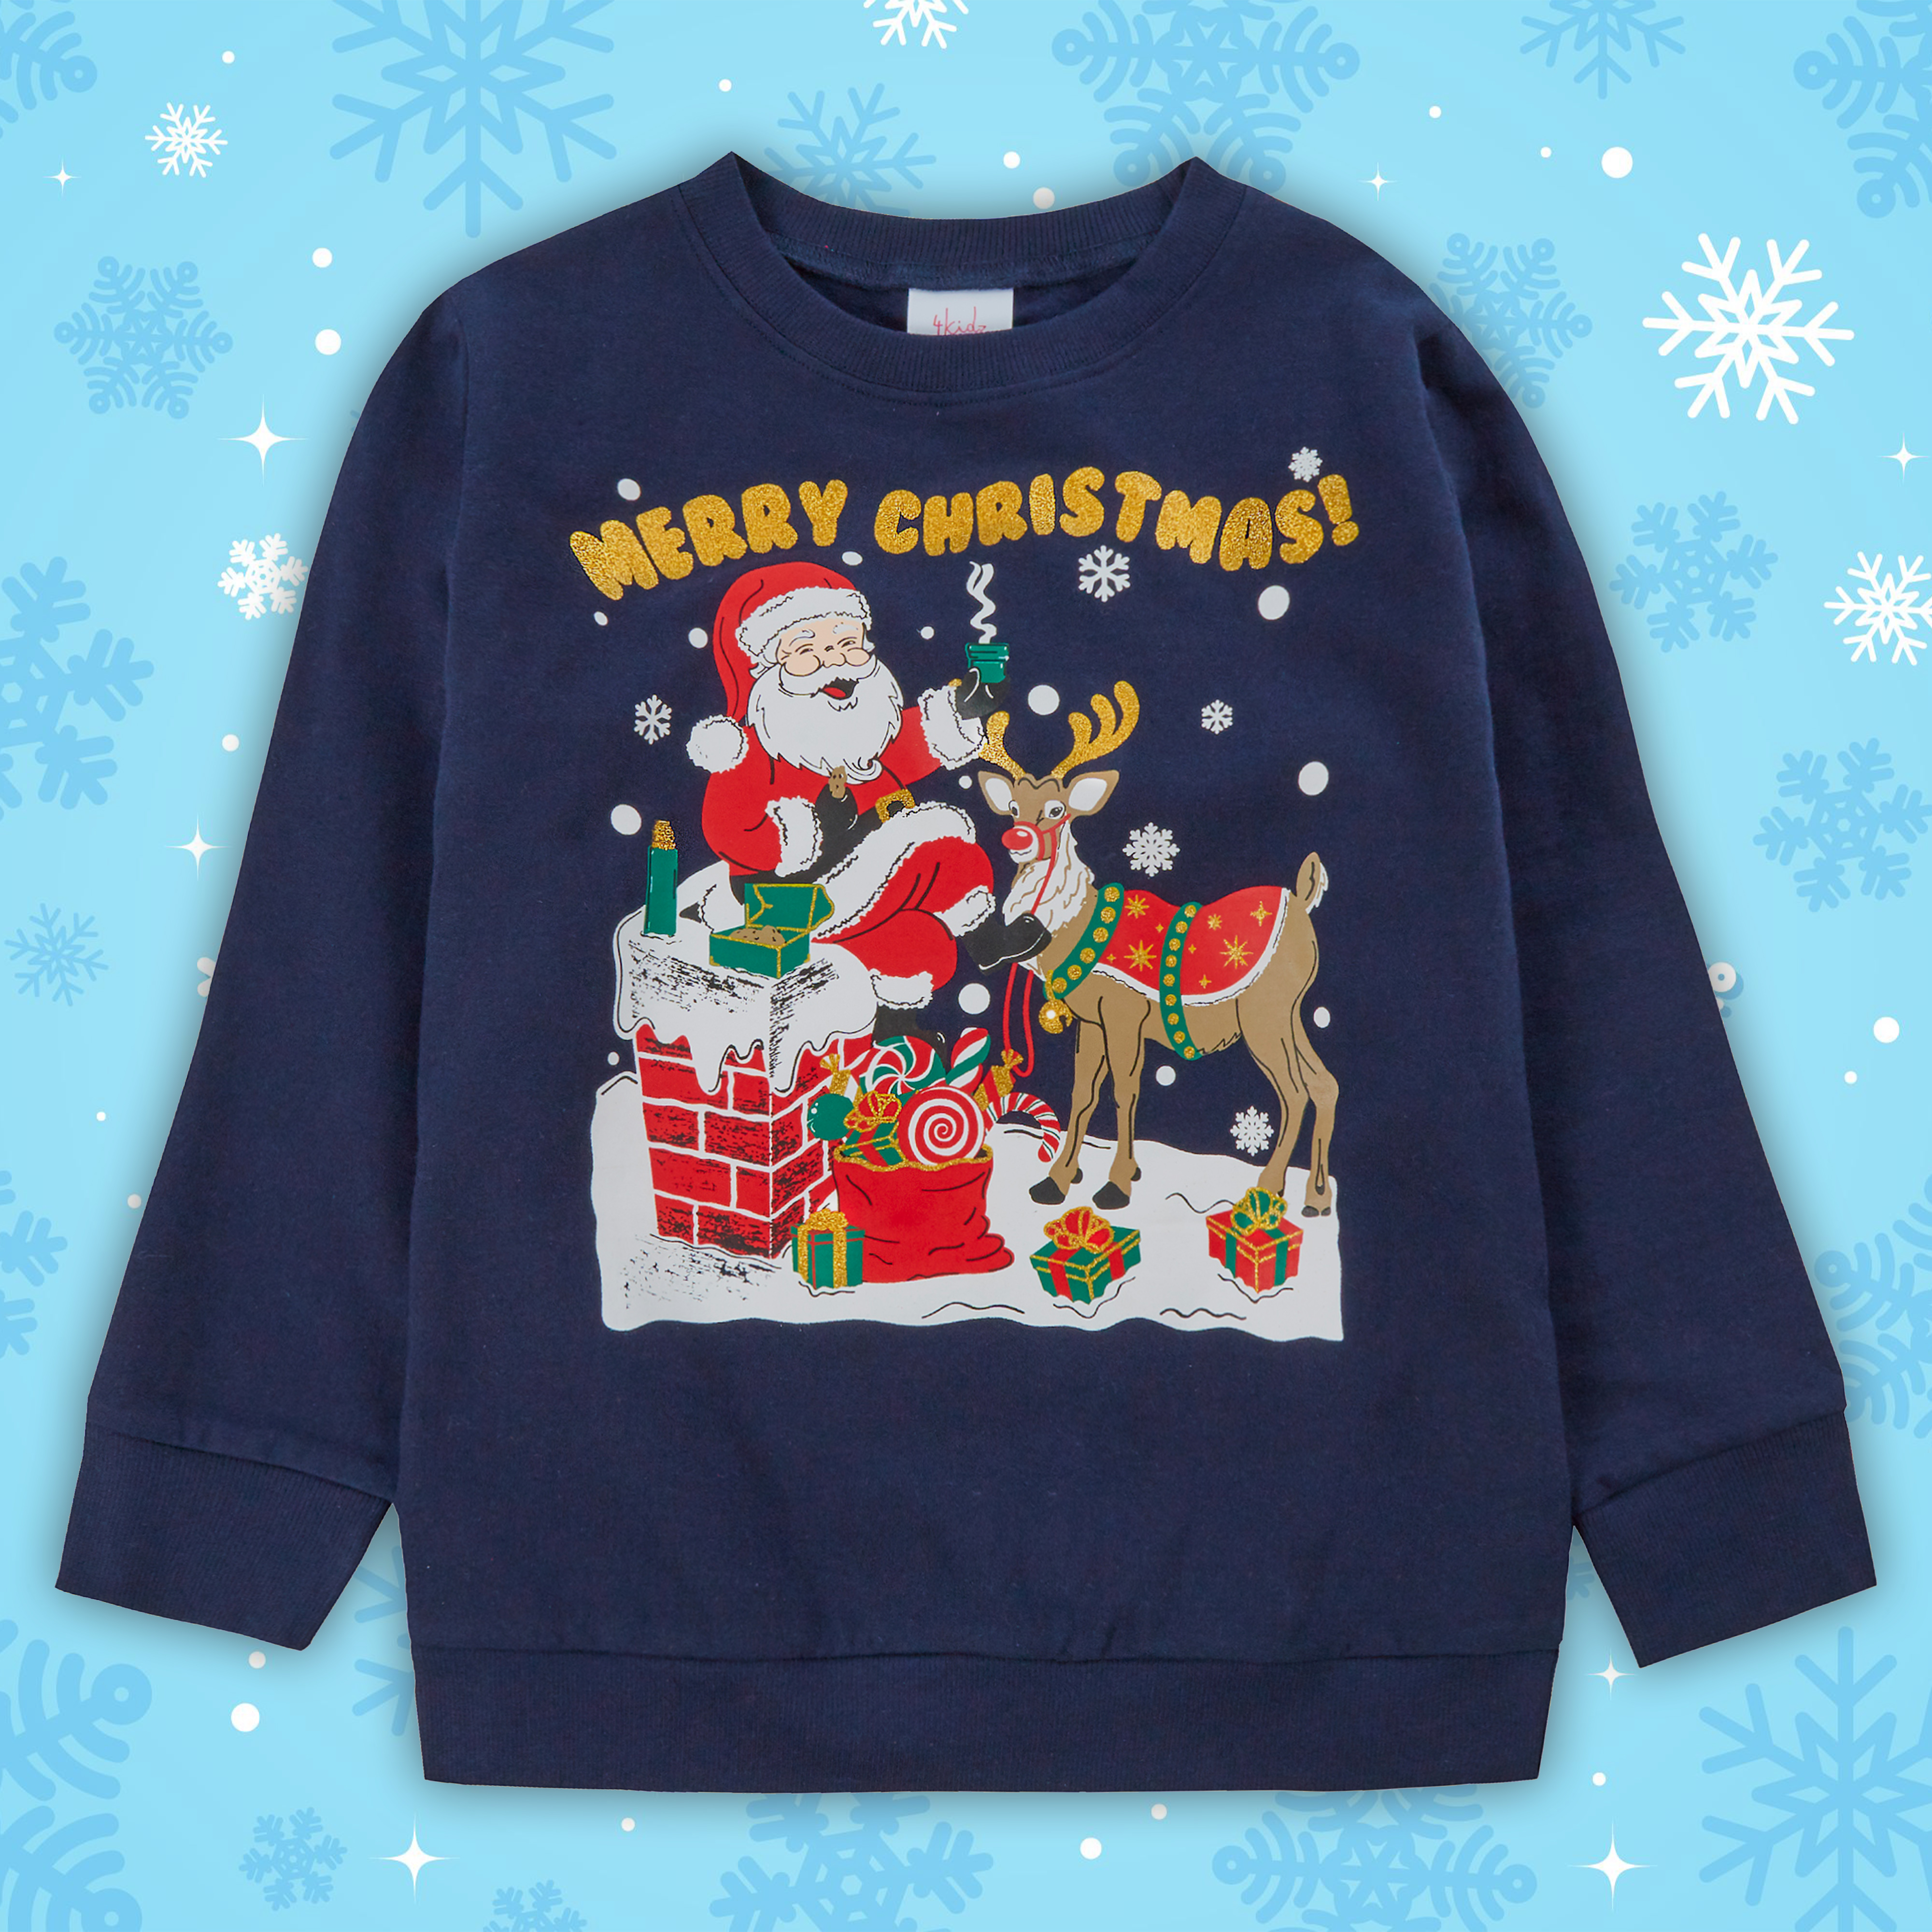 Childrens Kids Boys Girls Christmas Xmas Jumper Sweatshirt Sweater Glitter Warm 